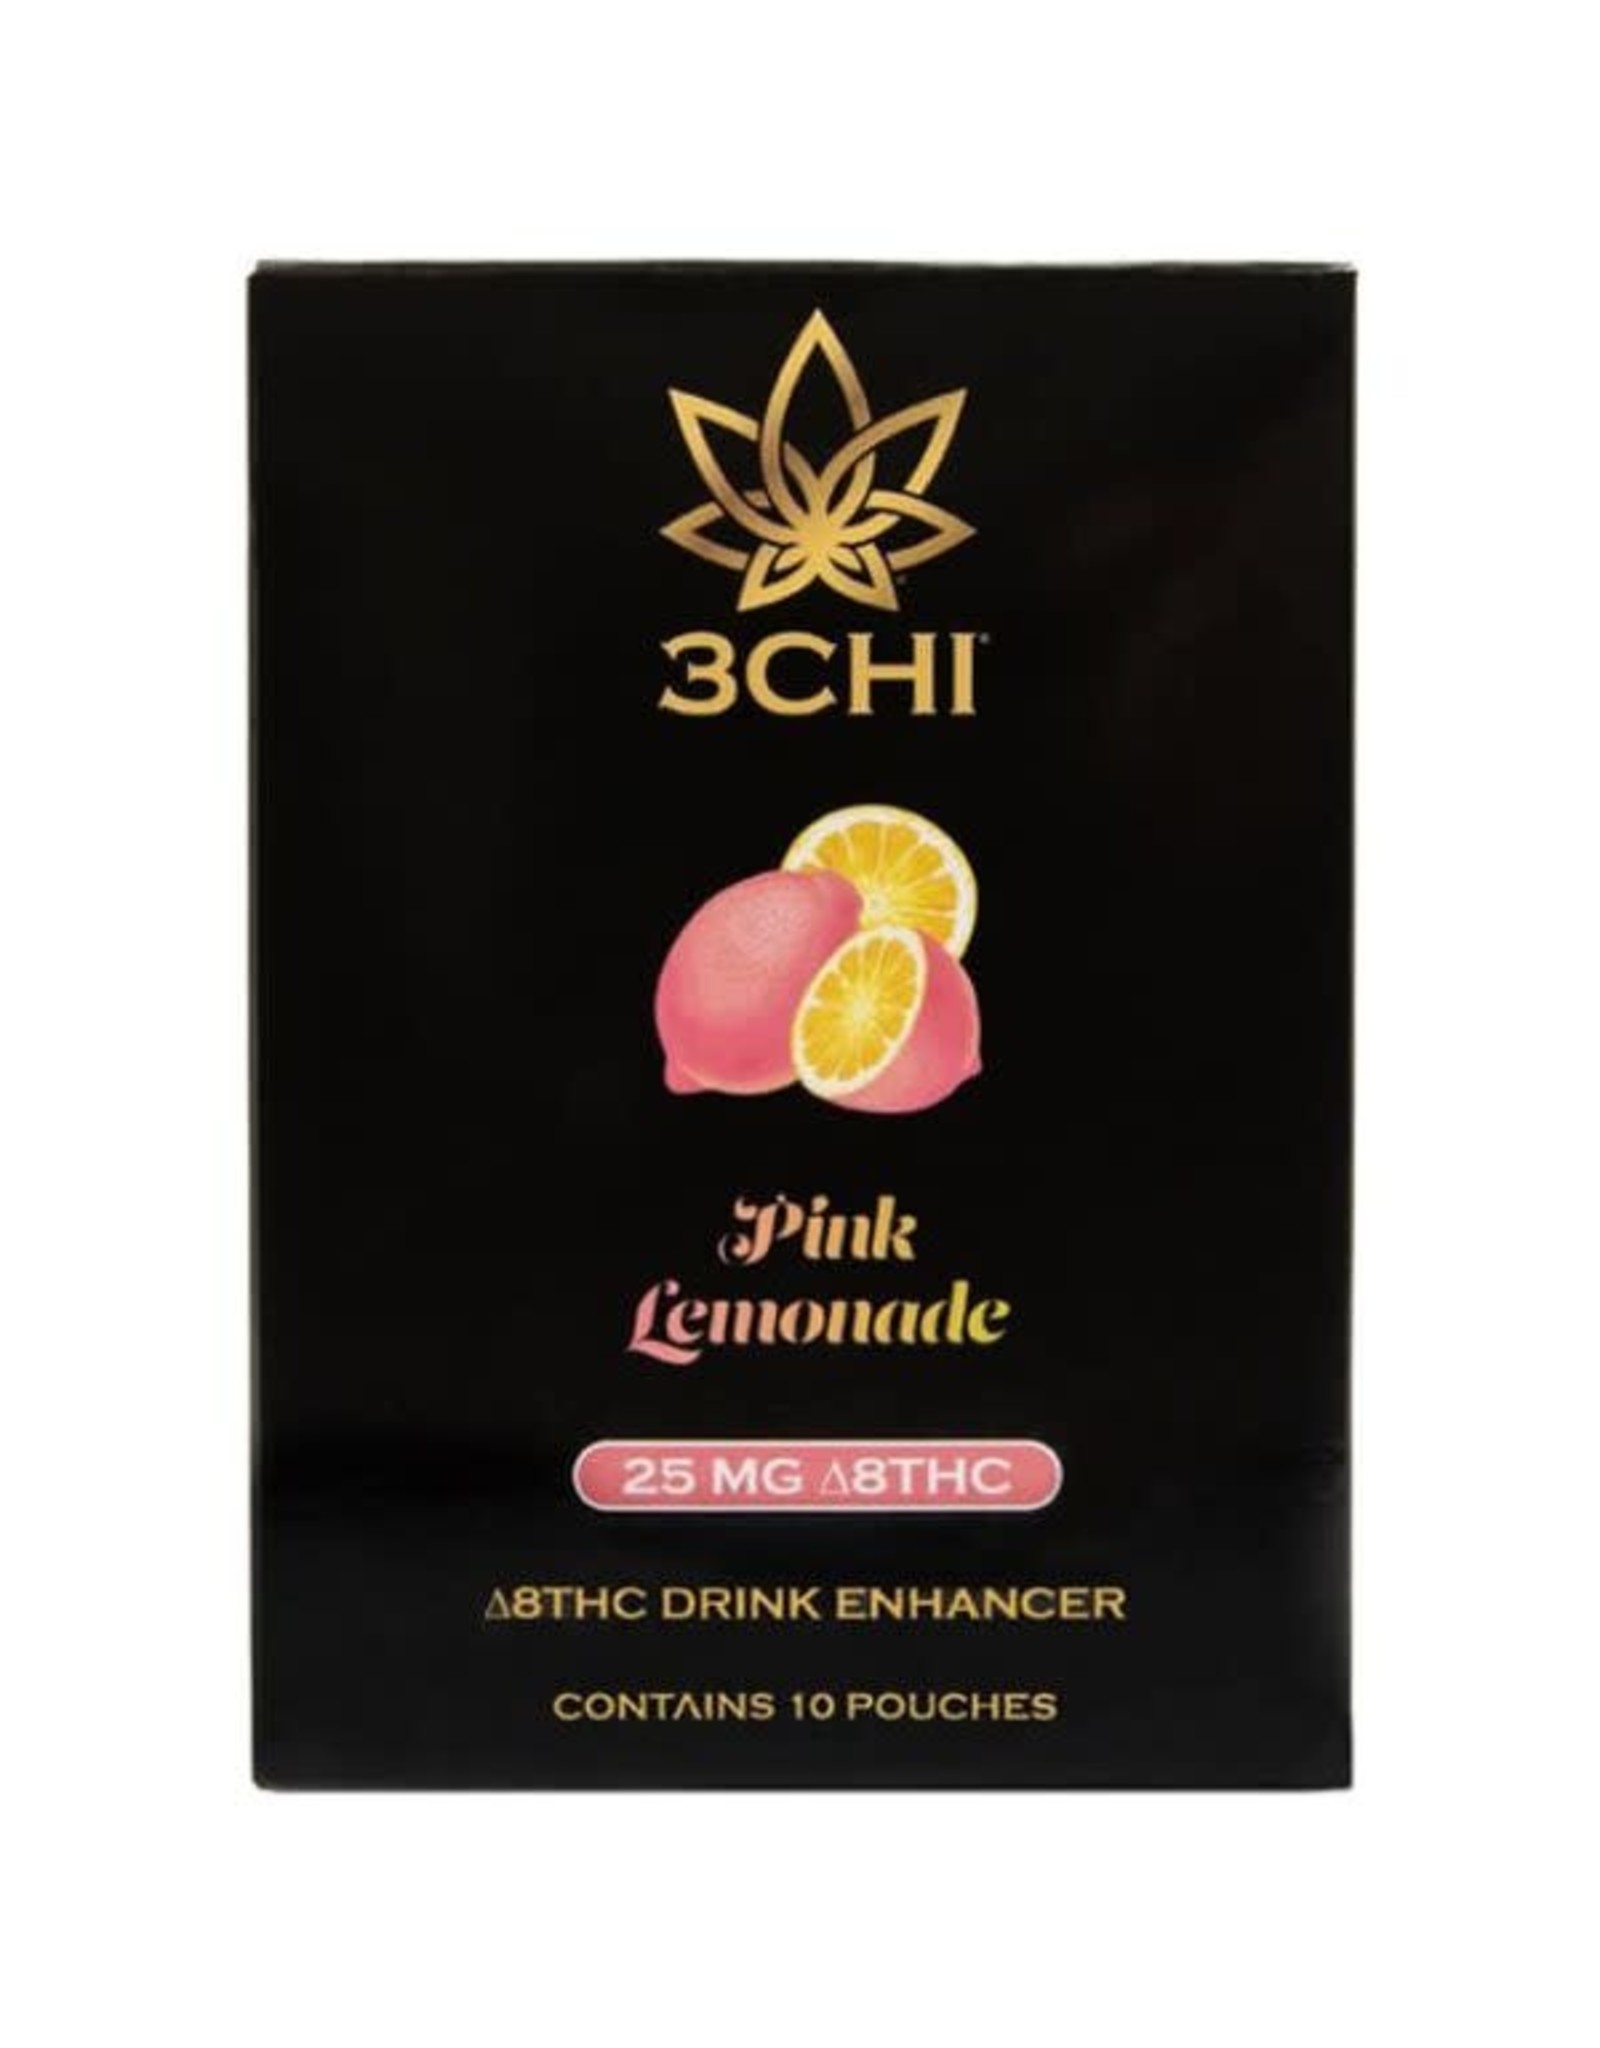 3CHI Pink Lemonade Delta 8 Drink Enhancers- 10 Packs at 25mg Each